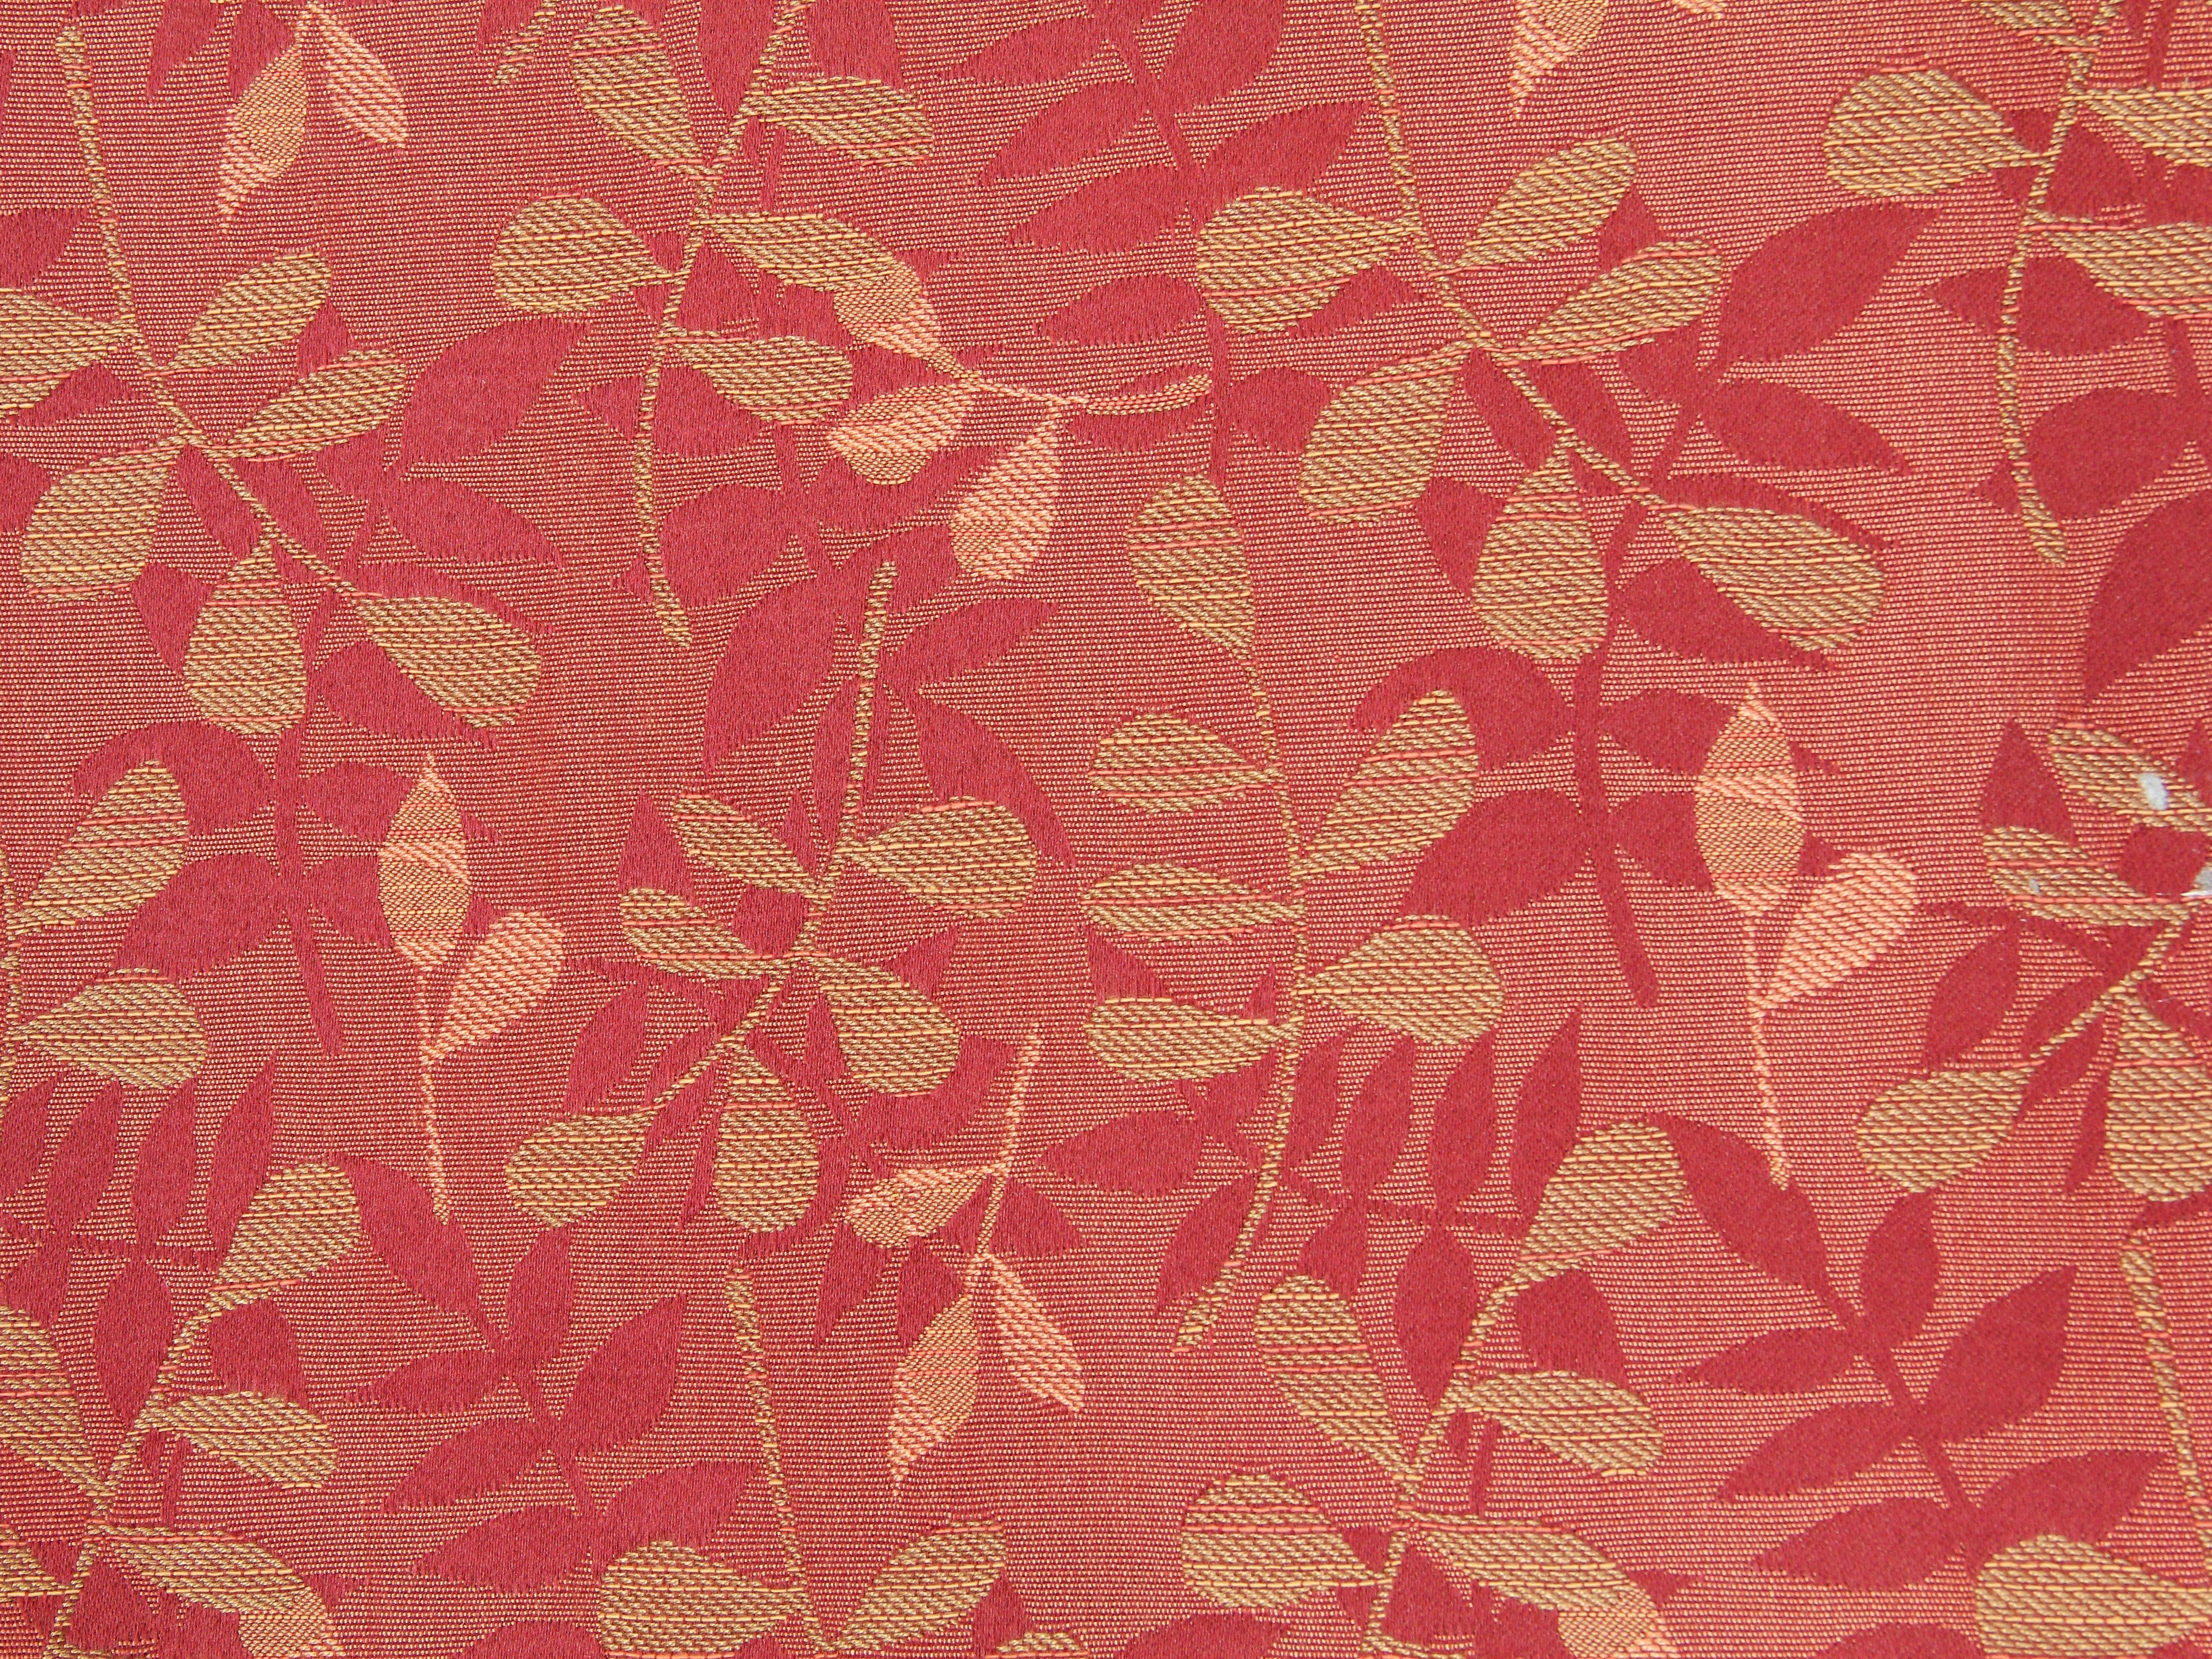 fabric texture red leaf pattern floral print desktop background